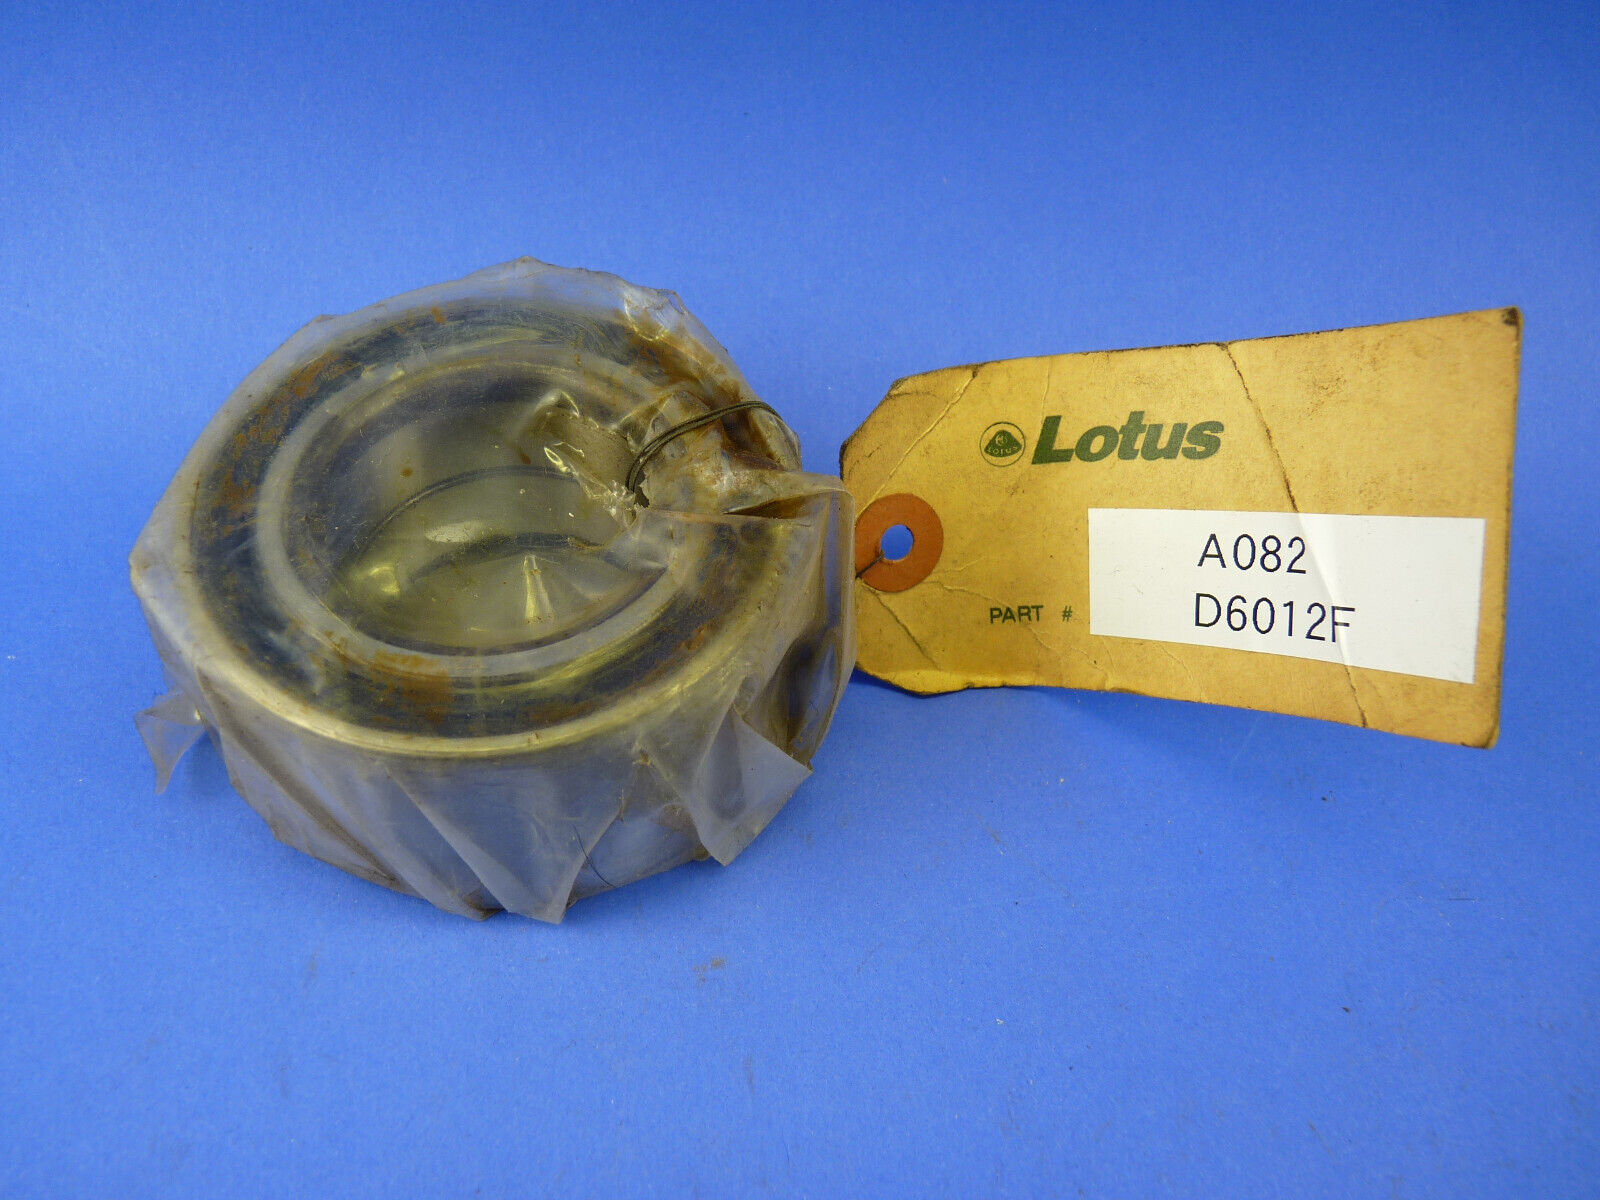 Lotus NOS Esprit Turbo SKF rear wheel bearing A082D6012F